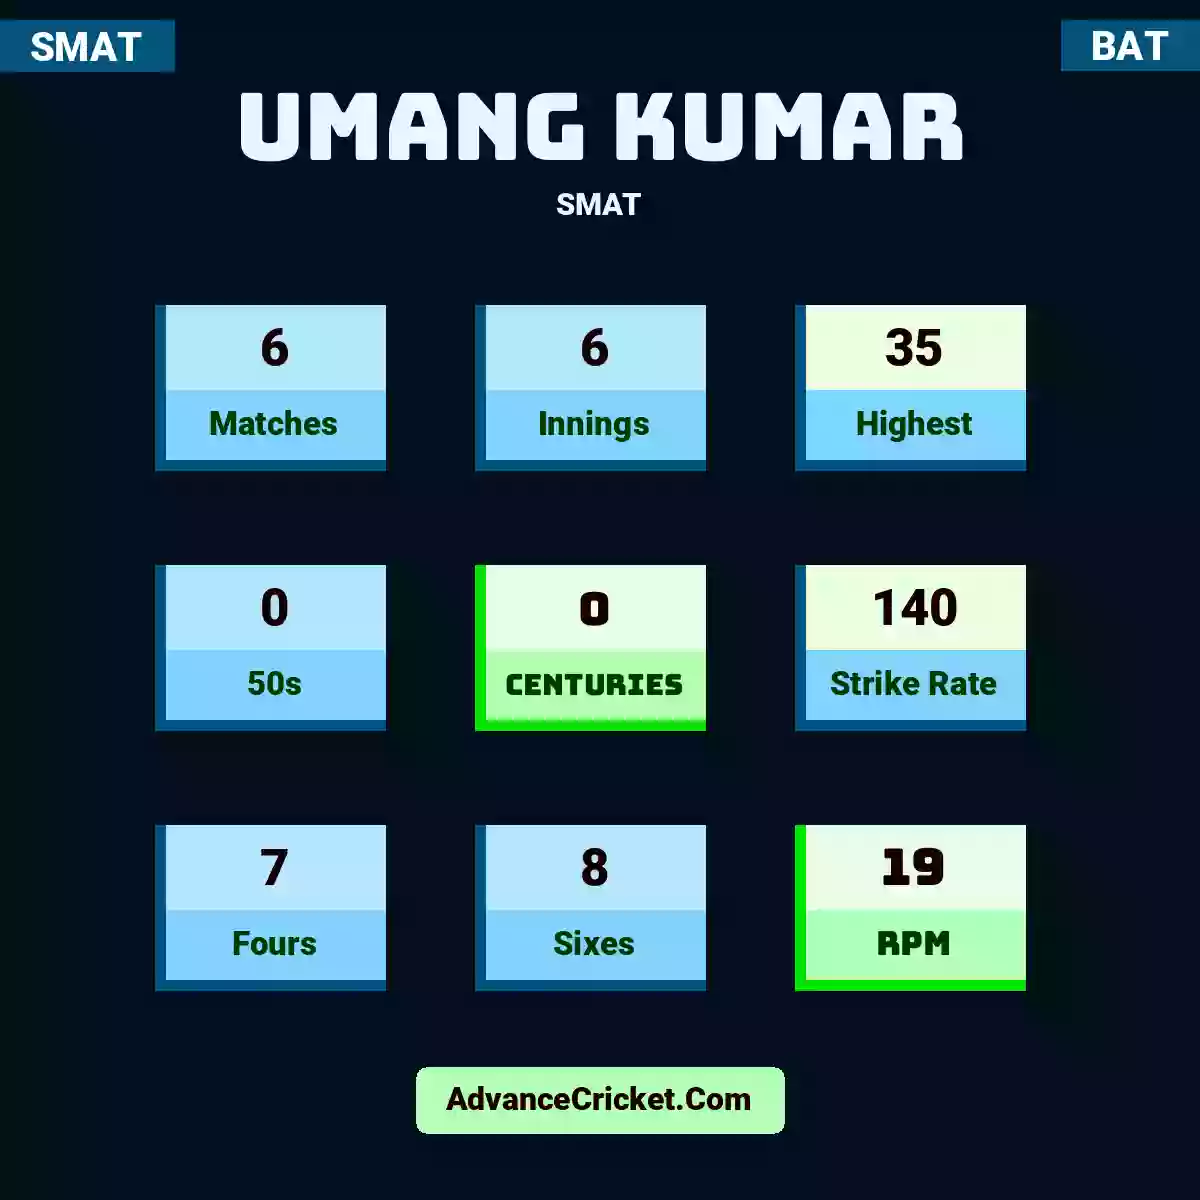 Umang Kumar SMAT , Umang Kumar played 6 matches, scored 35 runs as highest, 0 half-centuries, and 0 centuries, with a strike rate of 140. U.Kumar hit 7 fours and 8 sixes, with an RPM of 19.